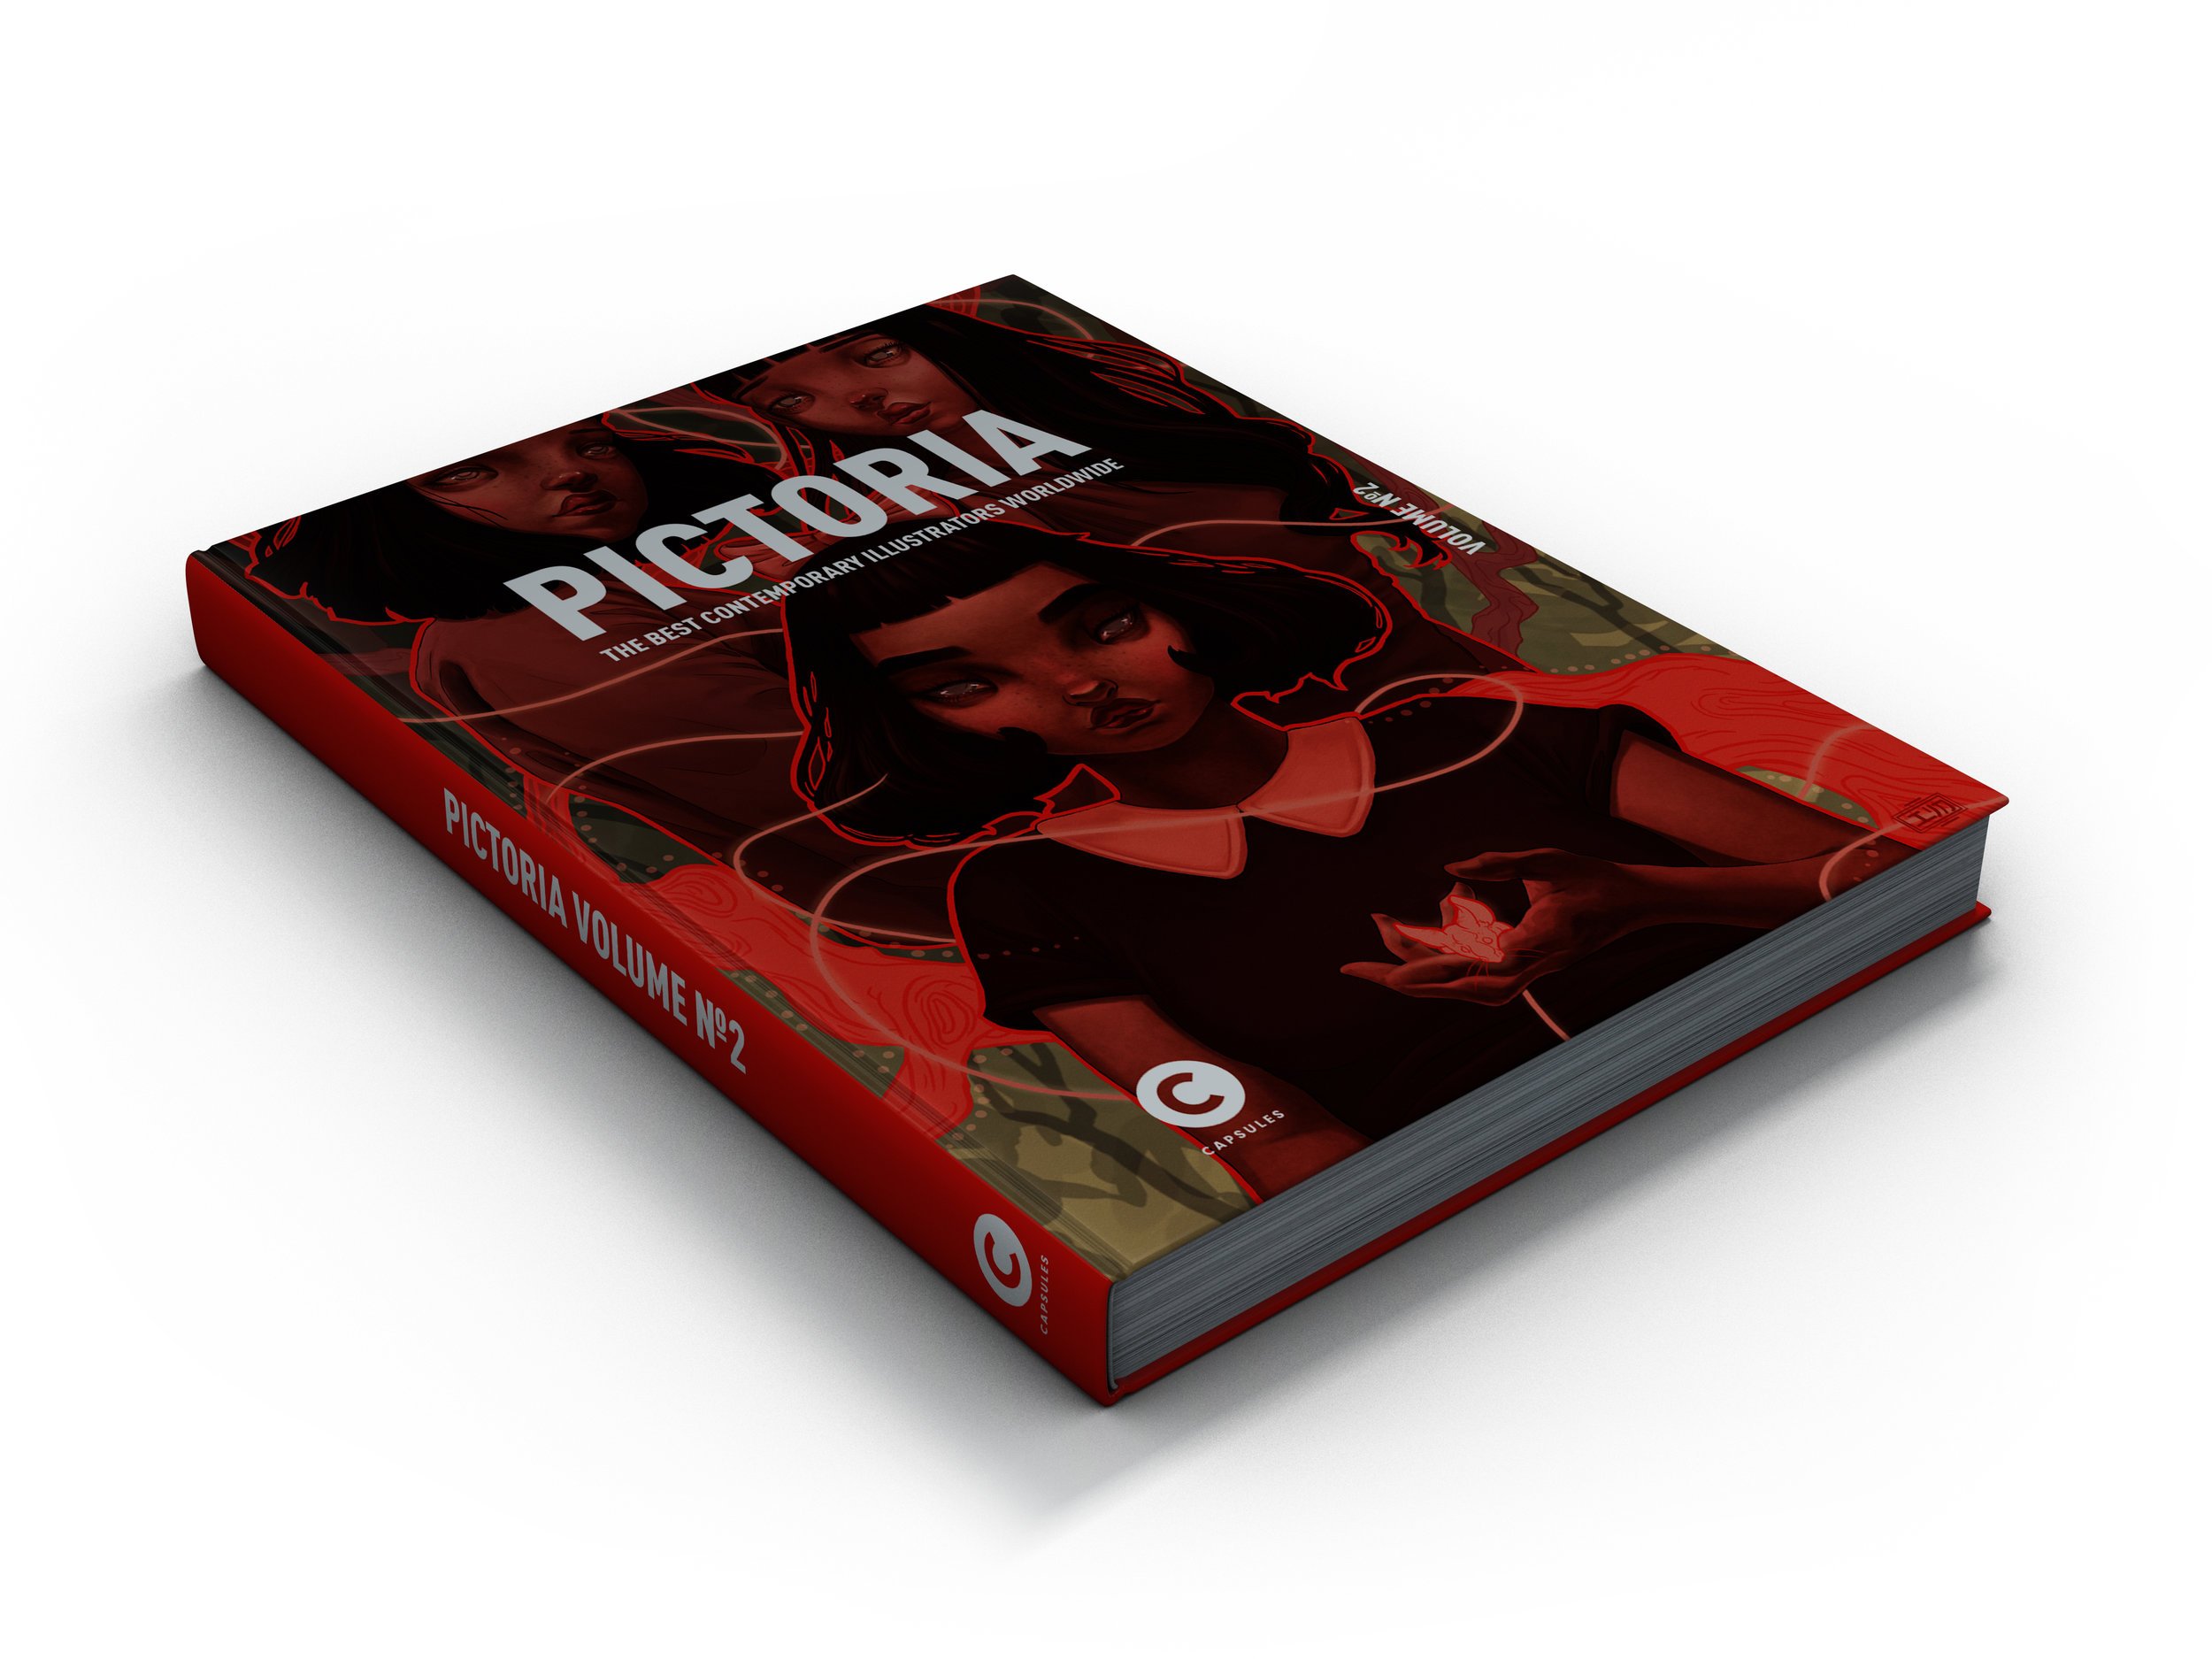 Pictoria-Volume.2-Profile.jpg